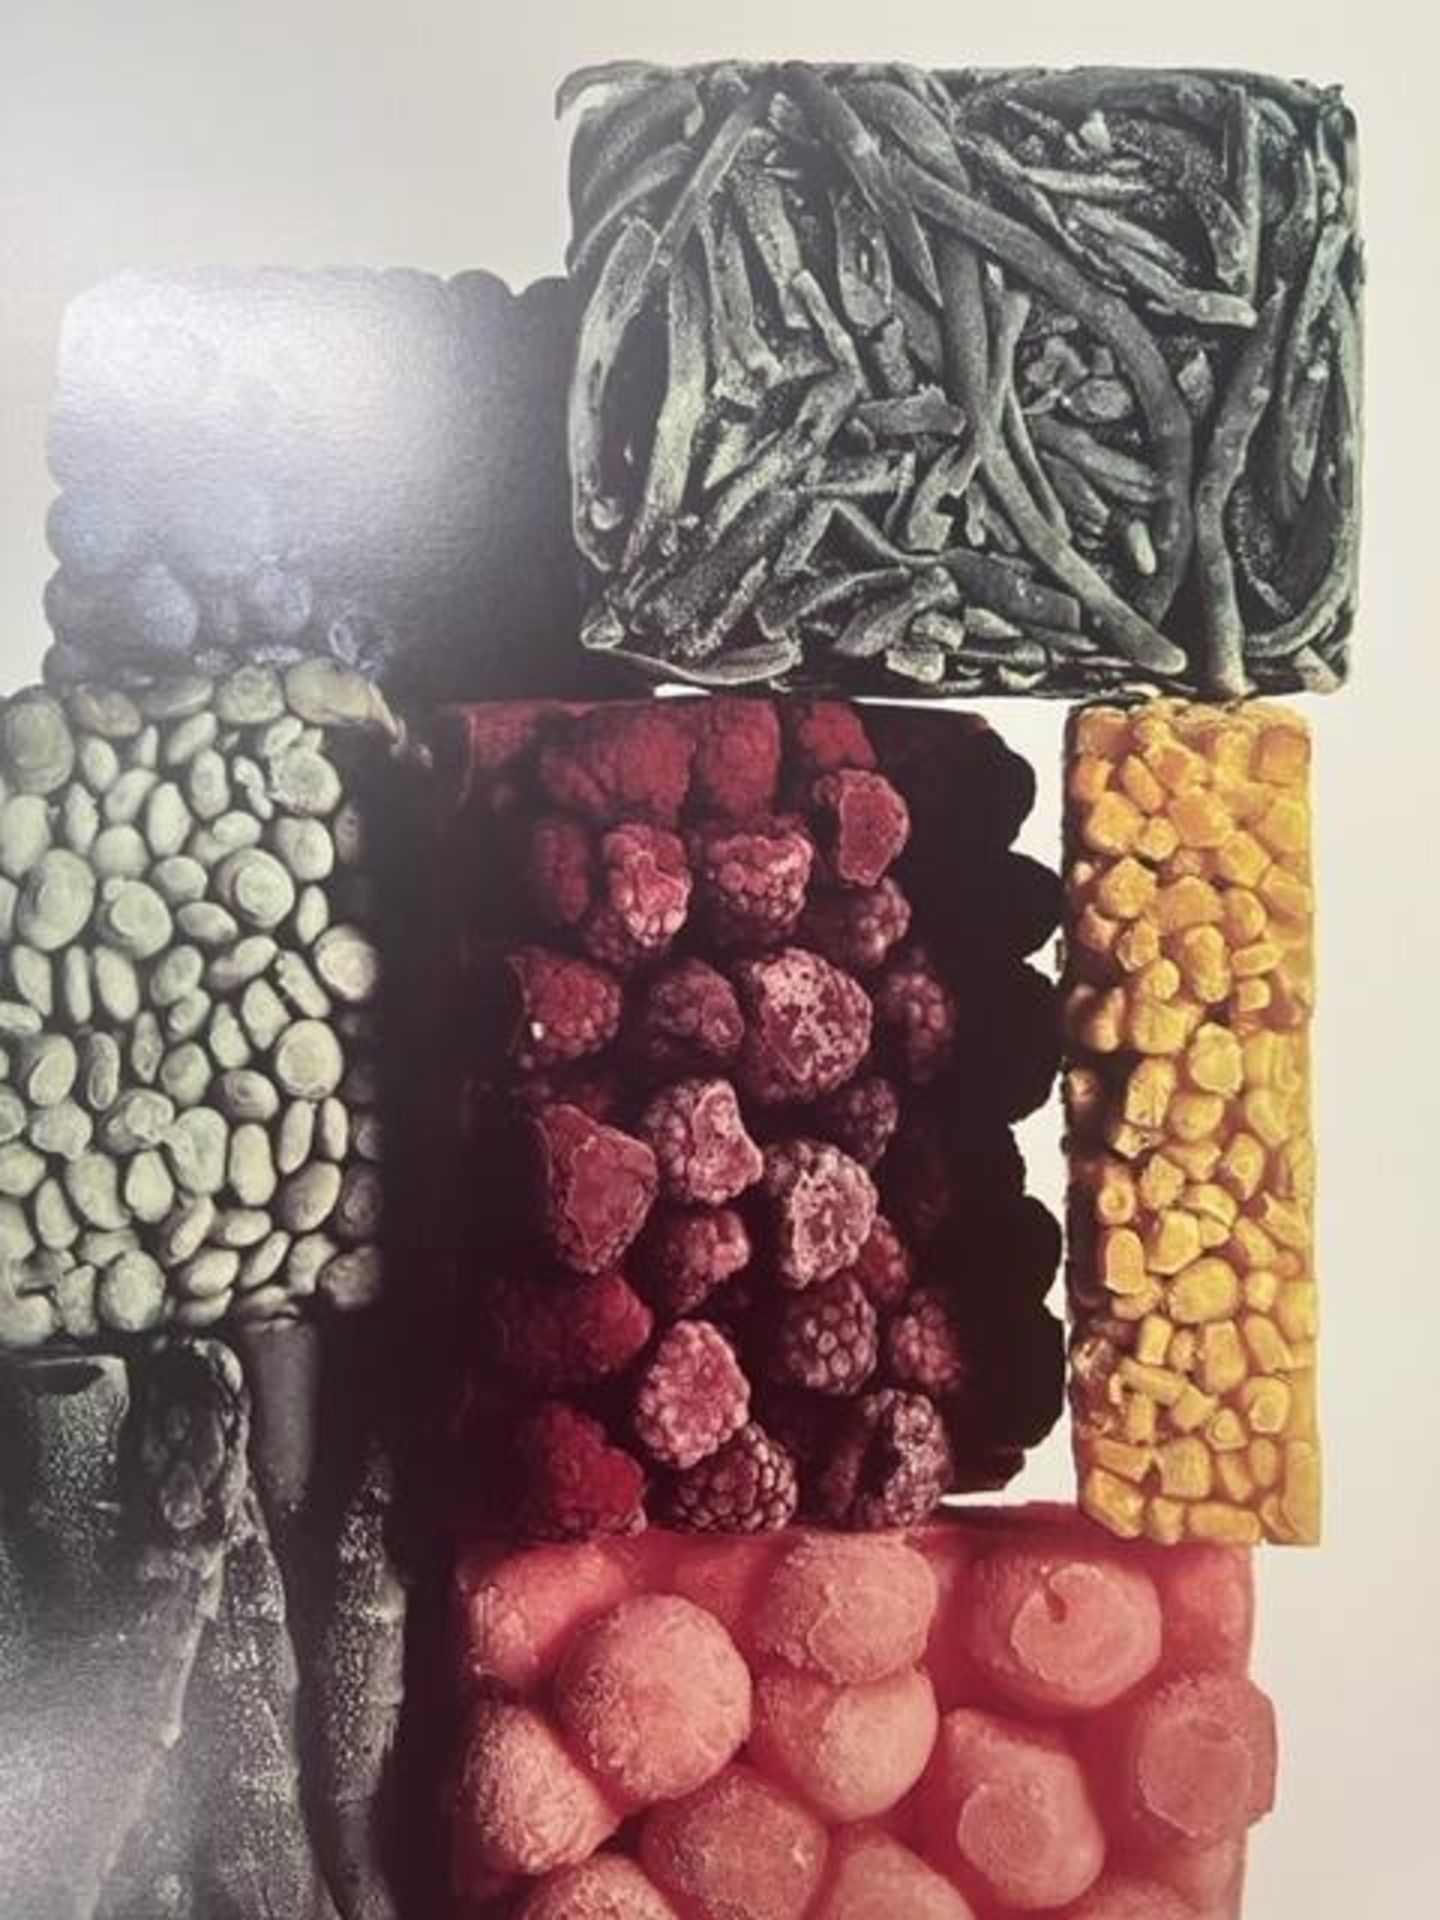 Irving Penn "Frozen Foods" Print. - Image 2 of 6